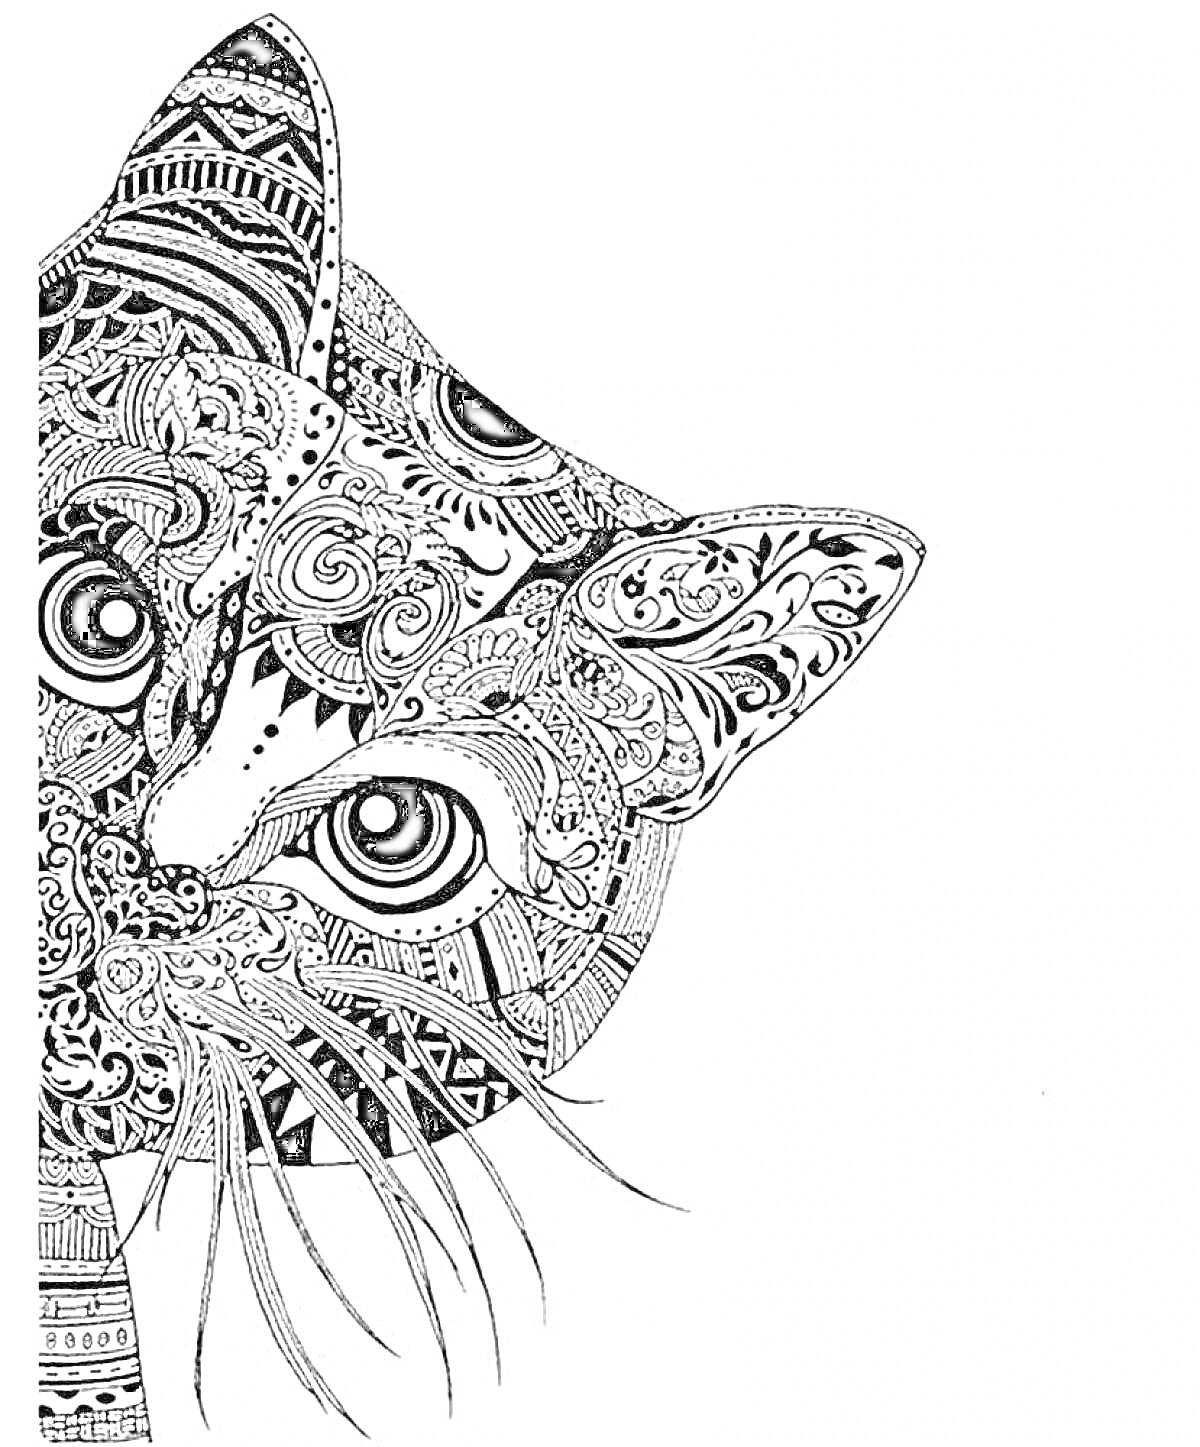 Раскраска Мандала кот, антистресс раскраска с узорами, закрученными линиями и точками